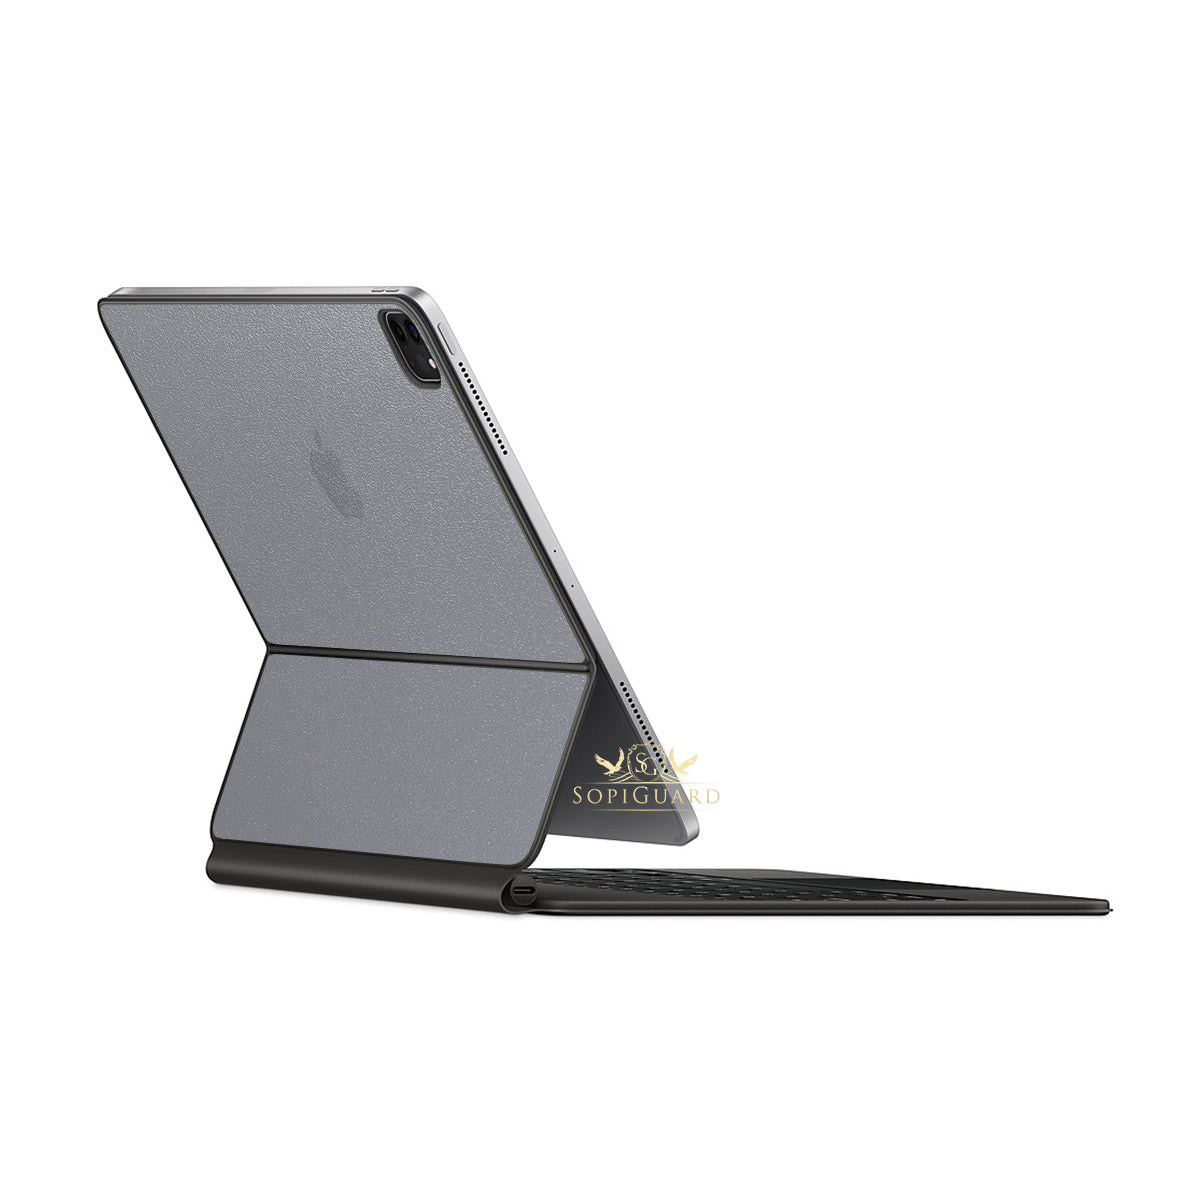 iPad Pro(12.9-inch) Smart Keyboard Folio